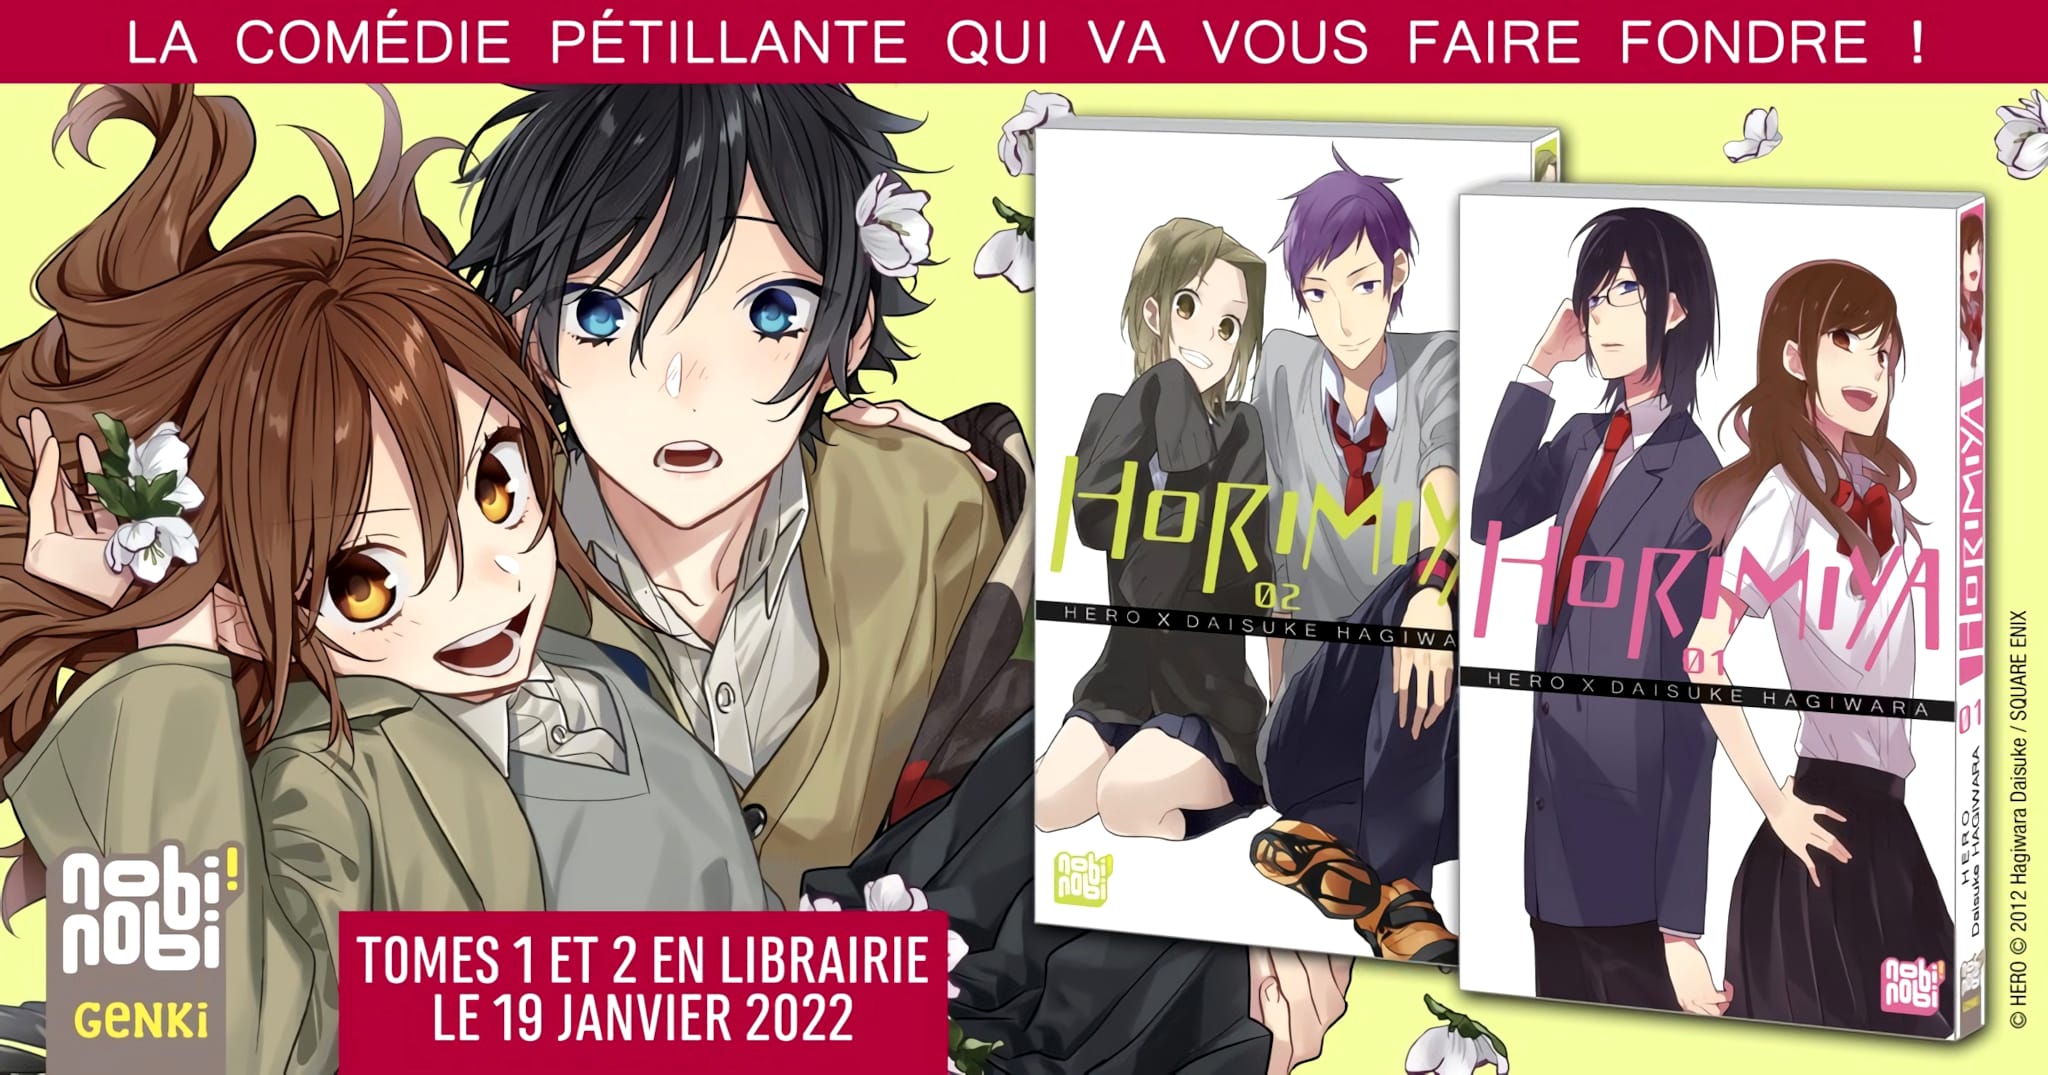 Annonce de la date de sortie du manga Horimiya en France chez nobi nobi !